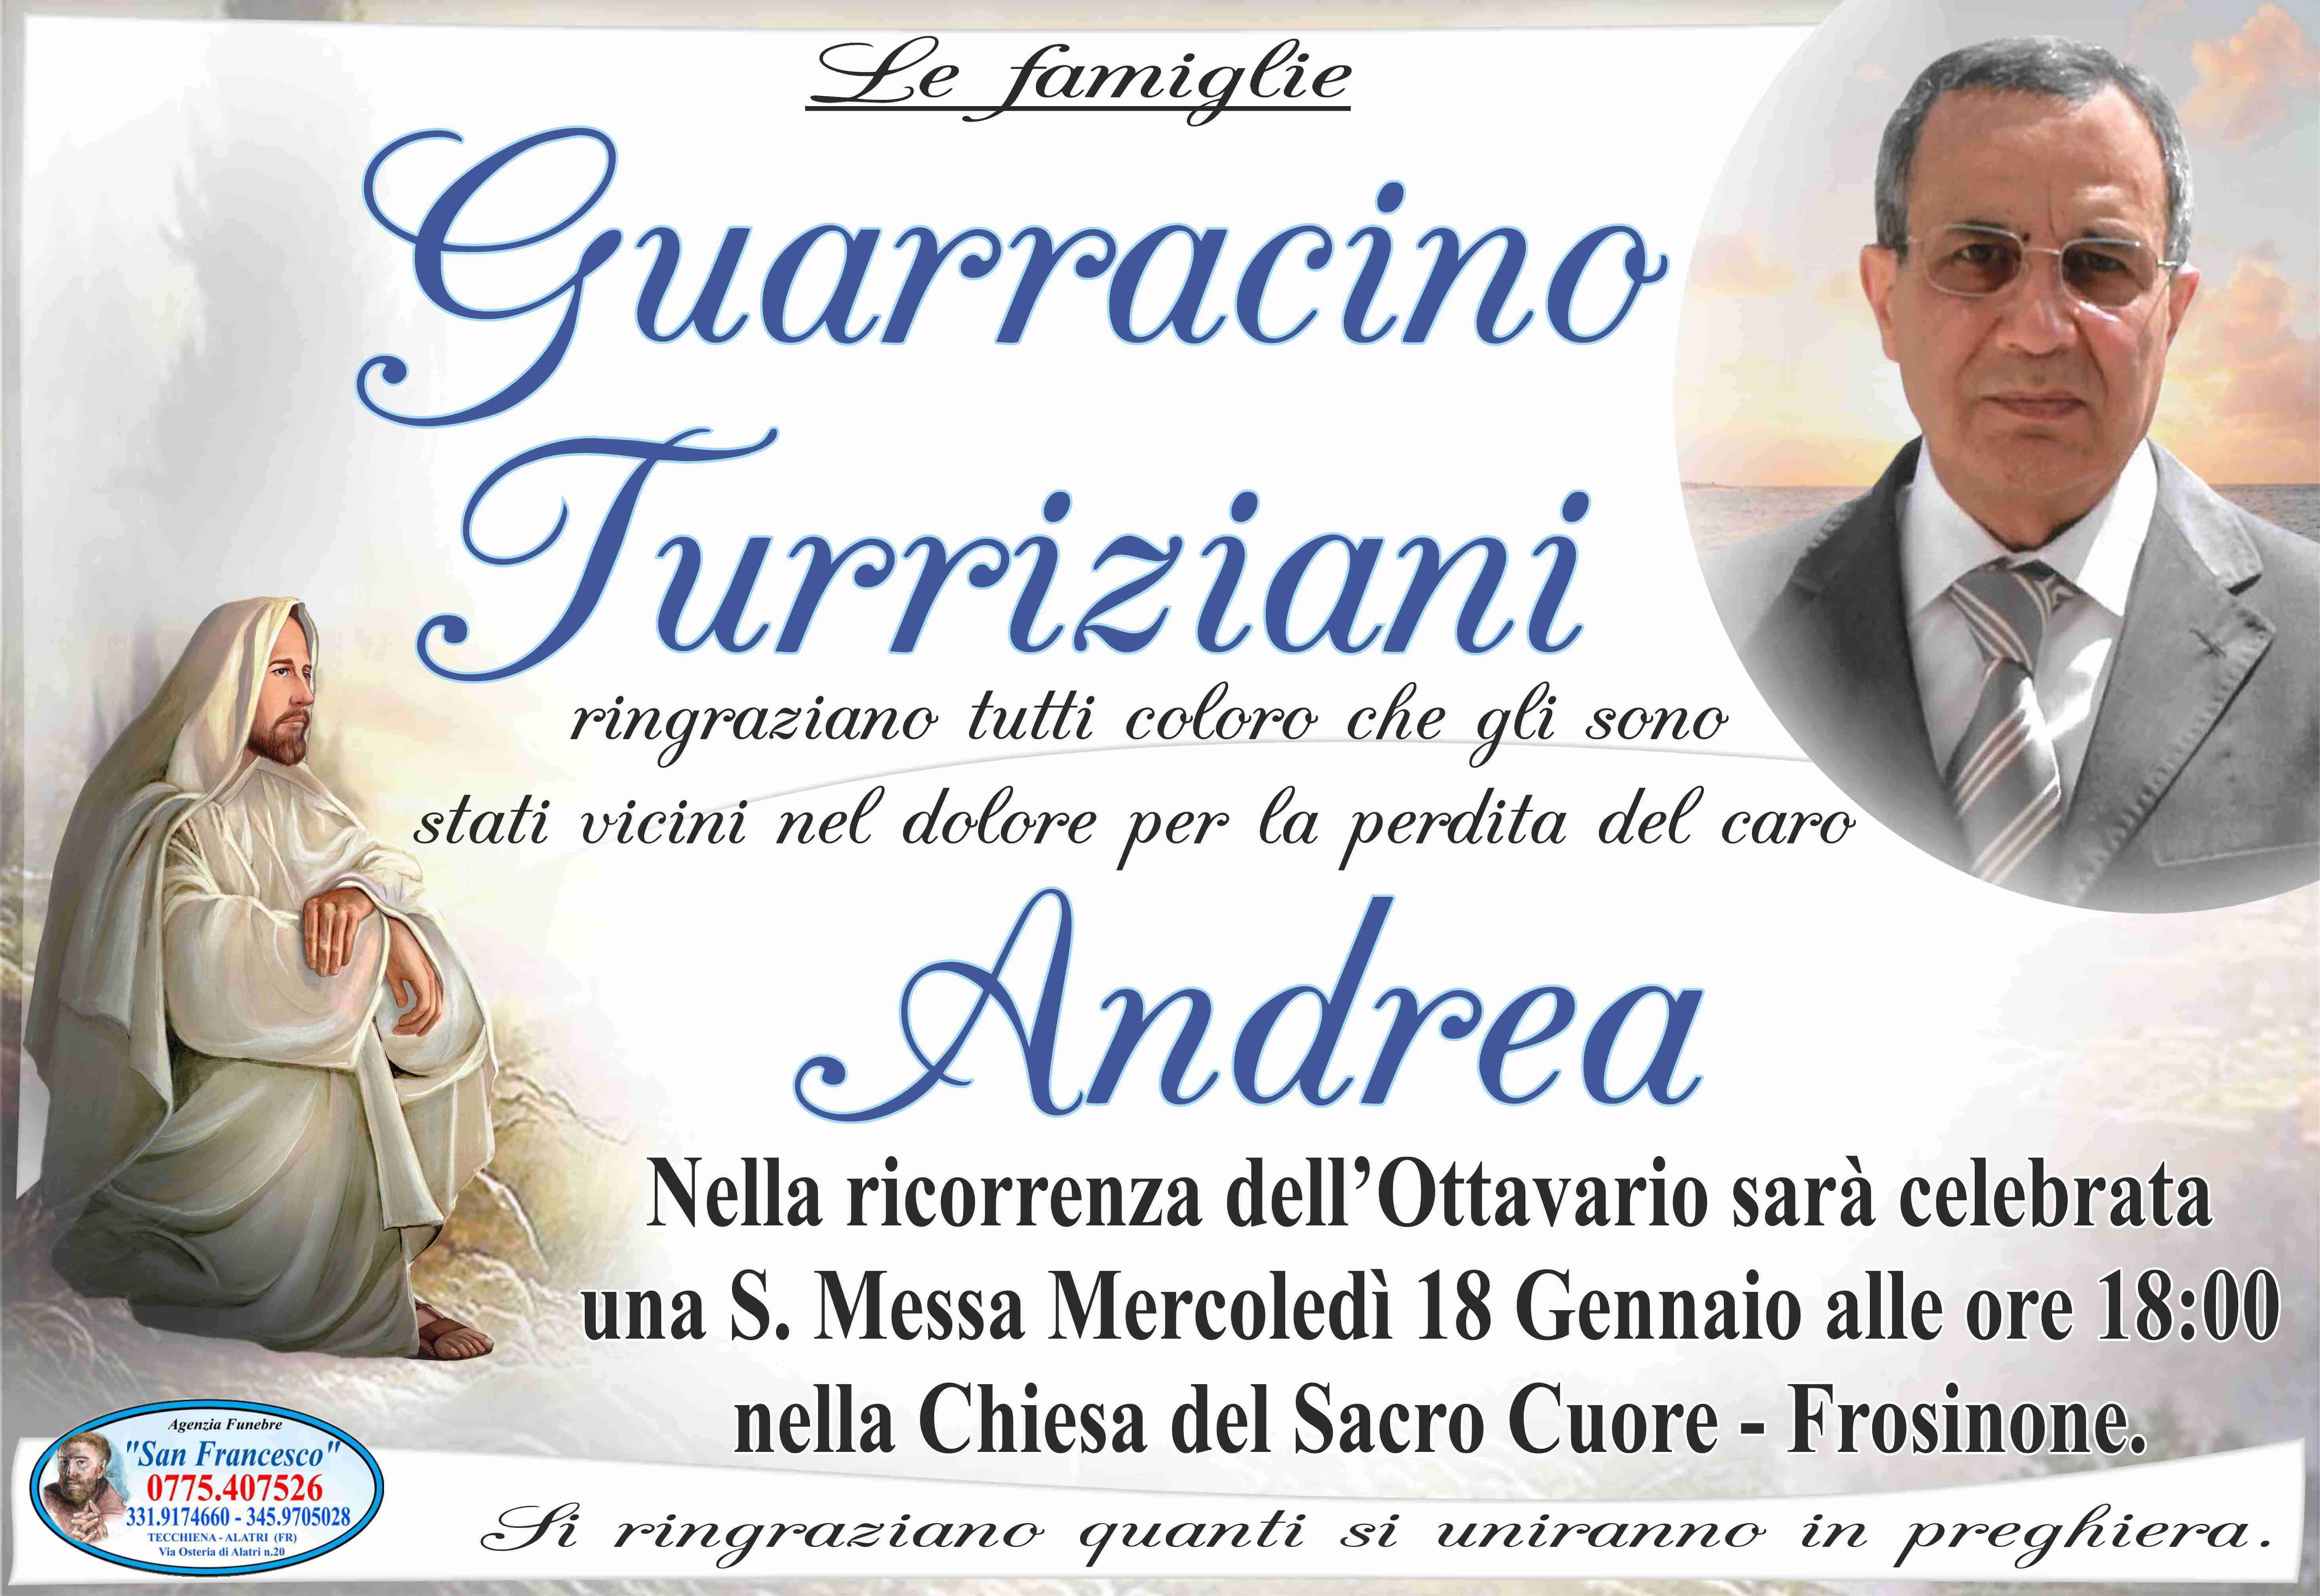 Andrea Guarracino